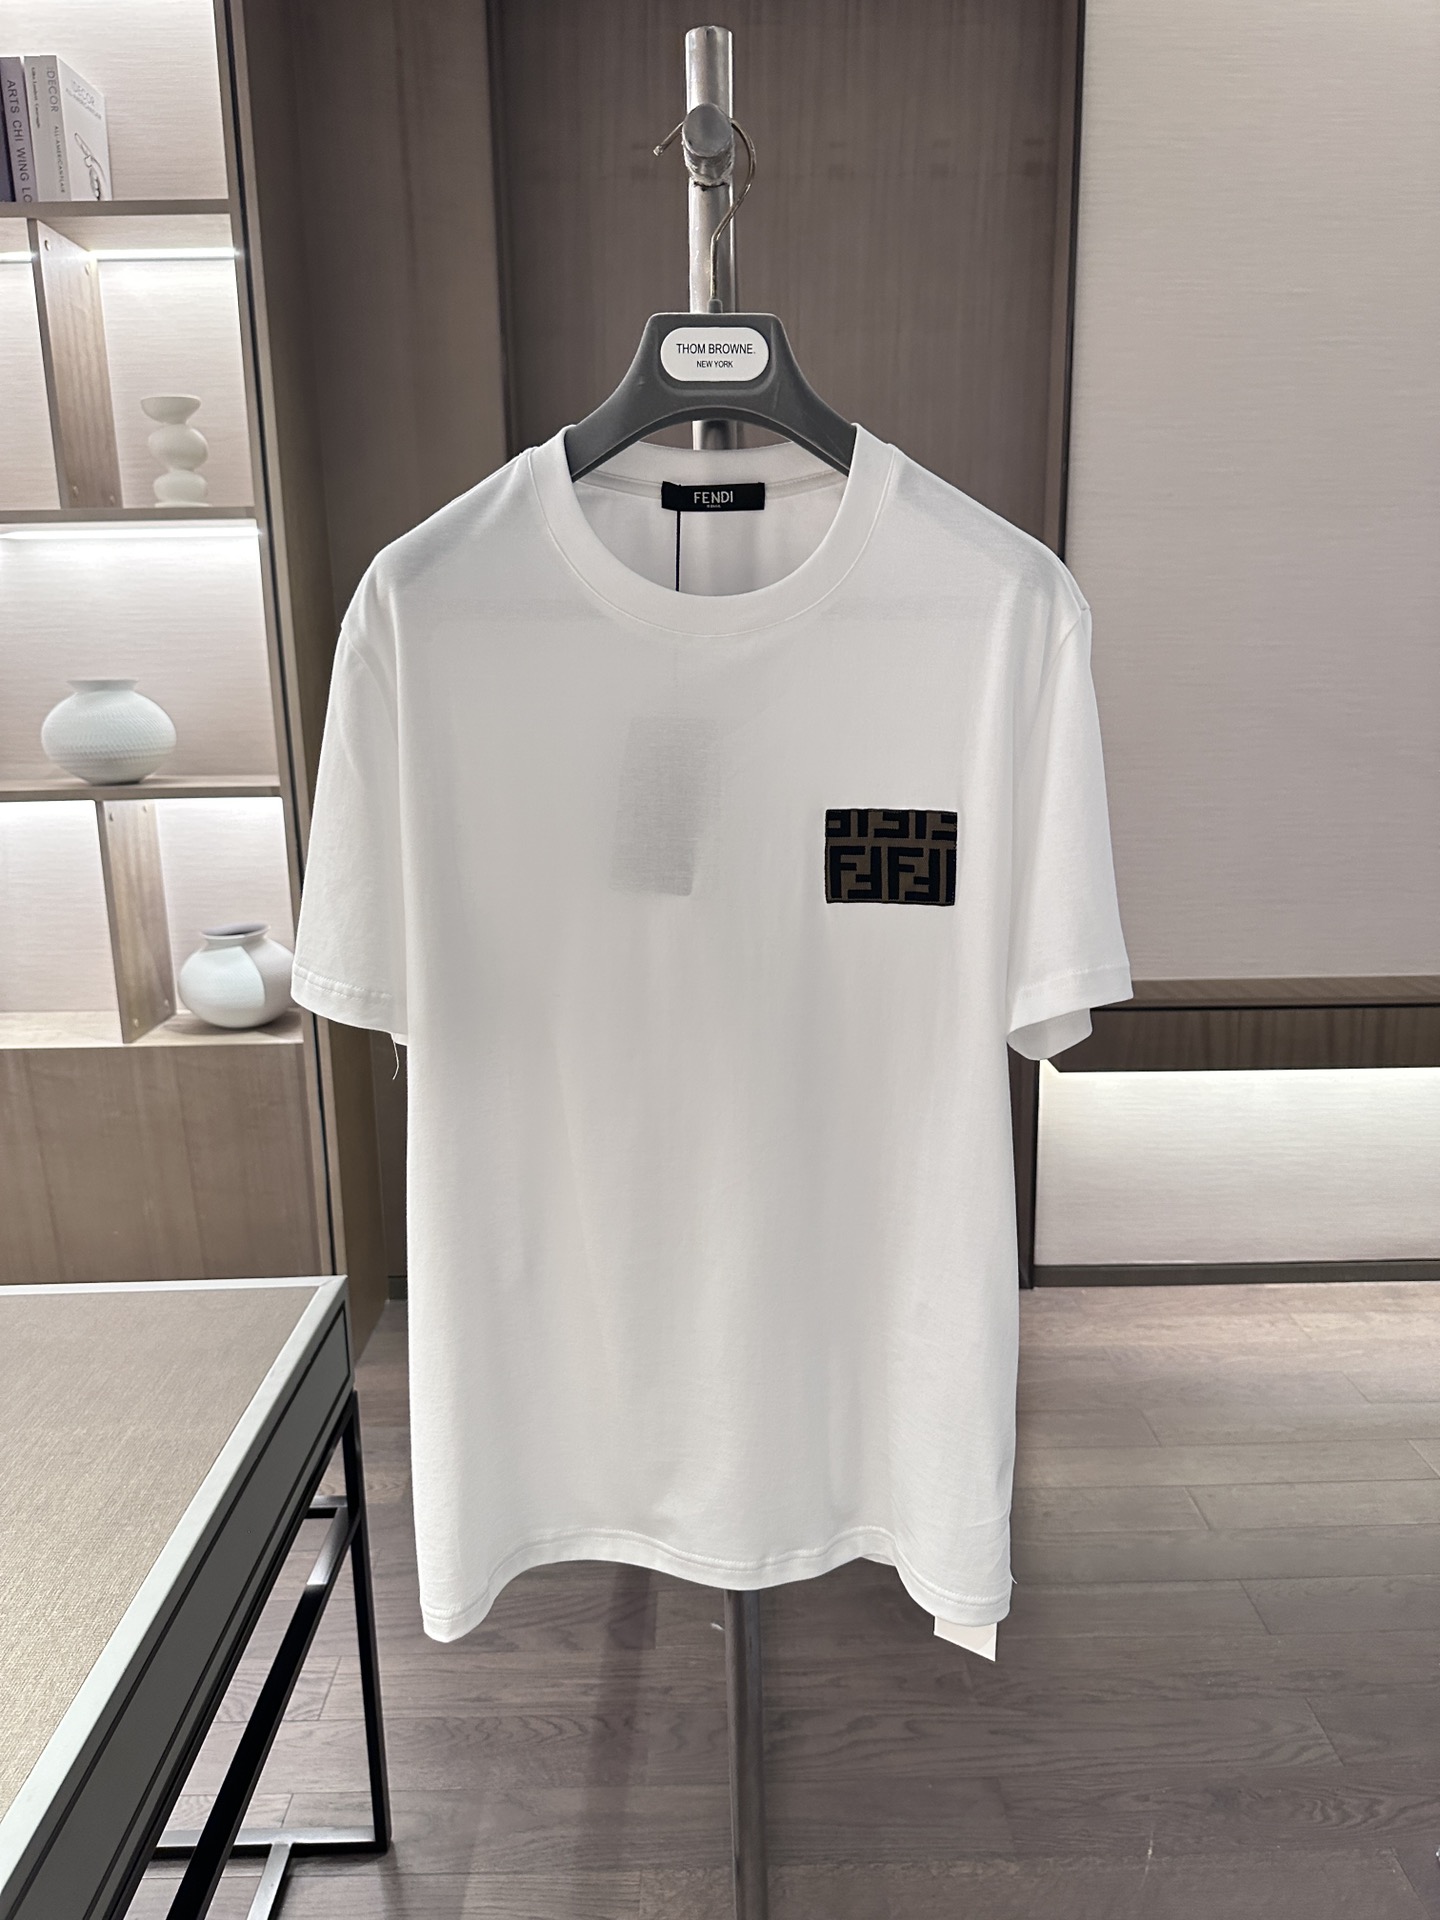 Fendi Clothing T-Shirt Cotton Summer Collection Short Sleeve